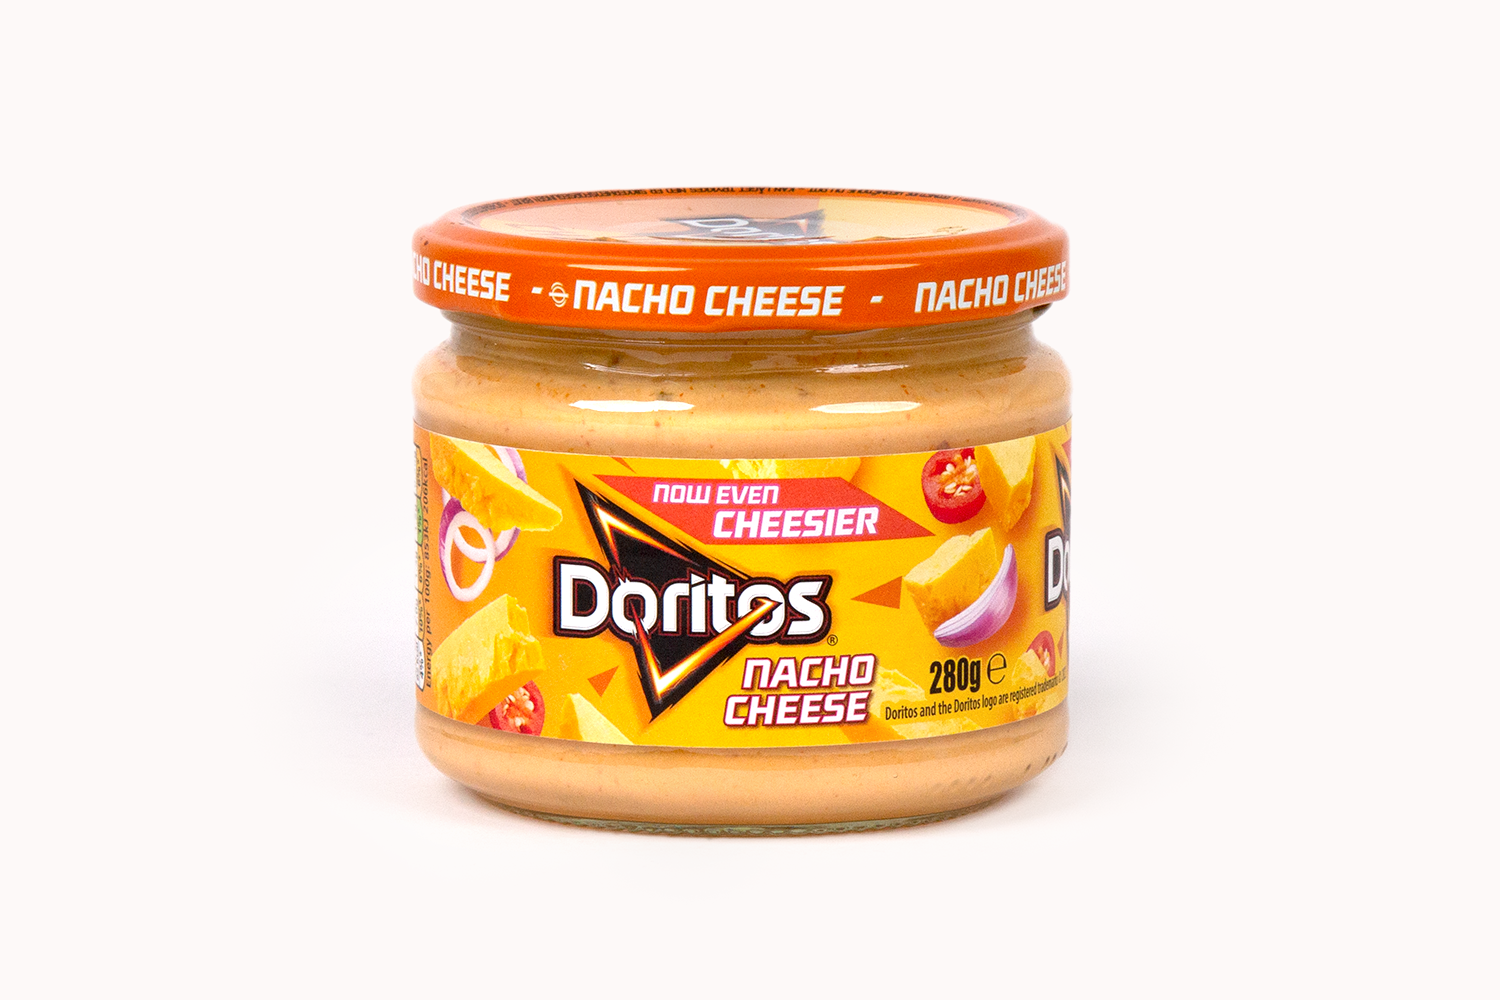 Doritos Nacho Cheese Jar